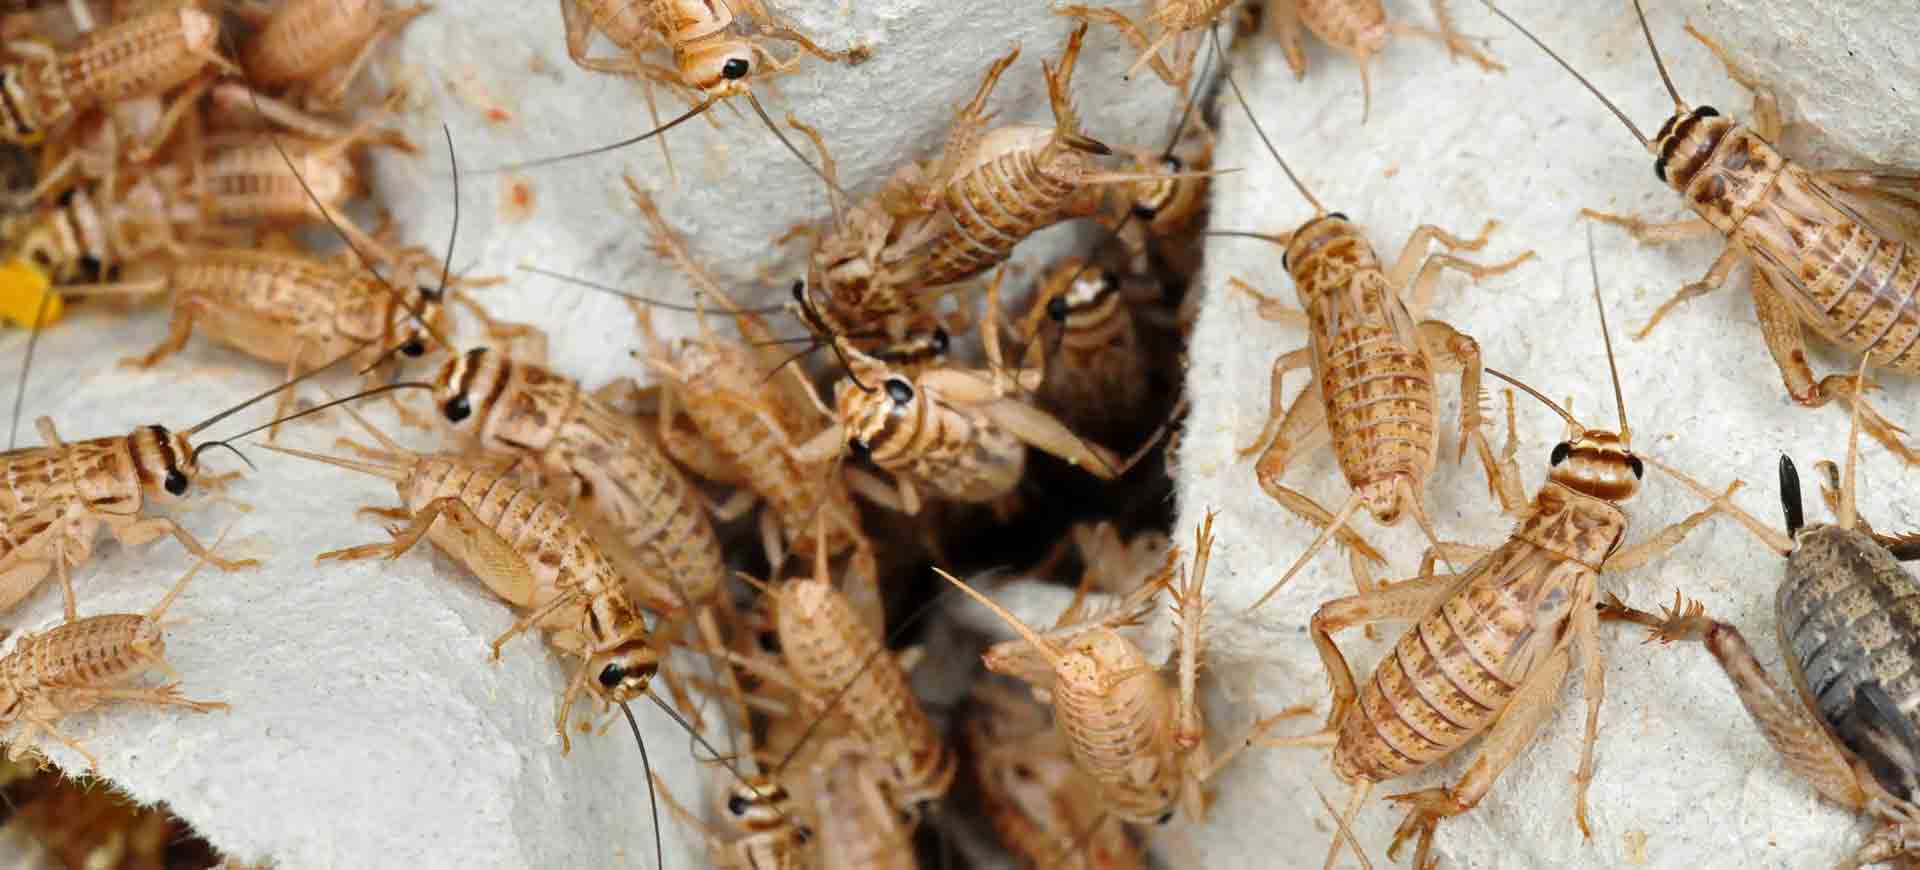 cricket pest control sorrento valley